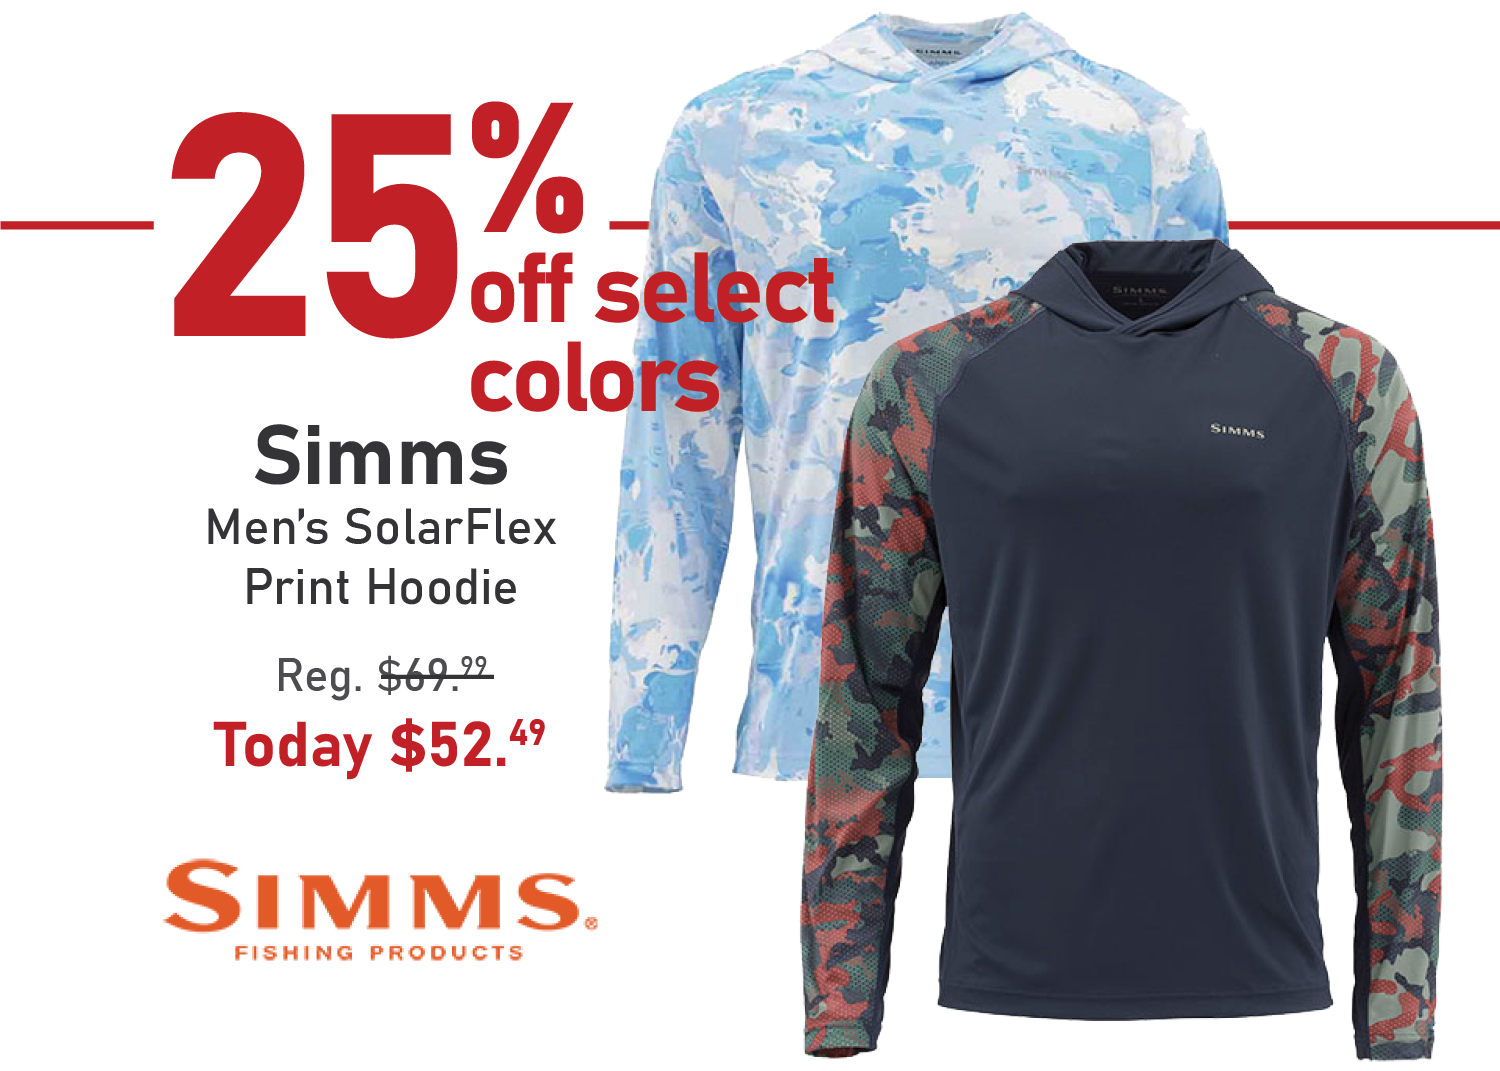 Save 25% on the Simms Men's SolarFlex Print Hoodie